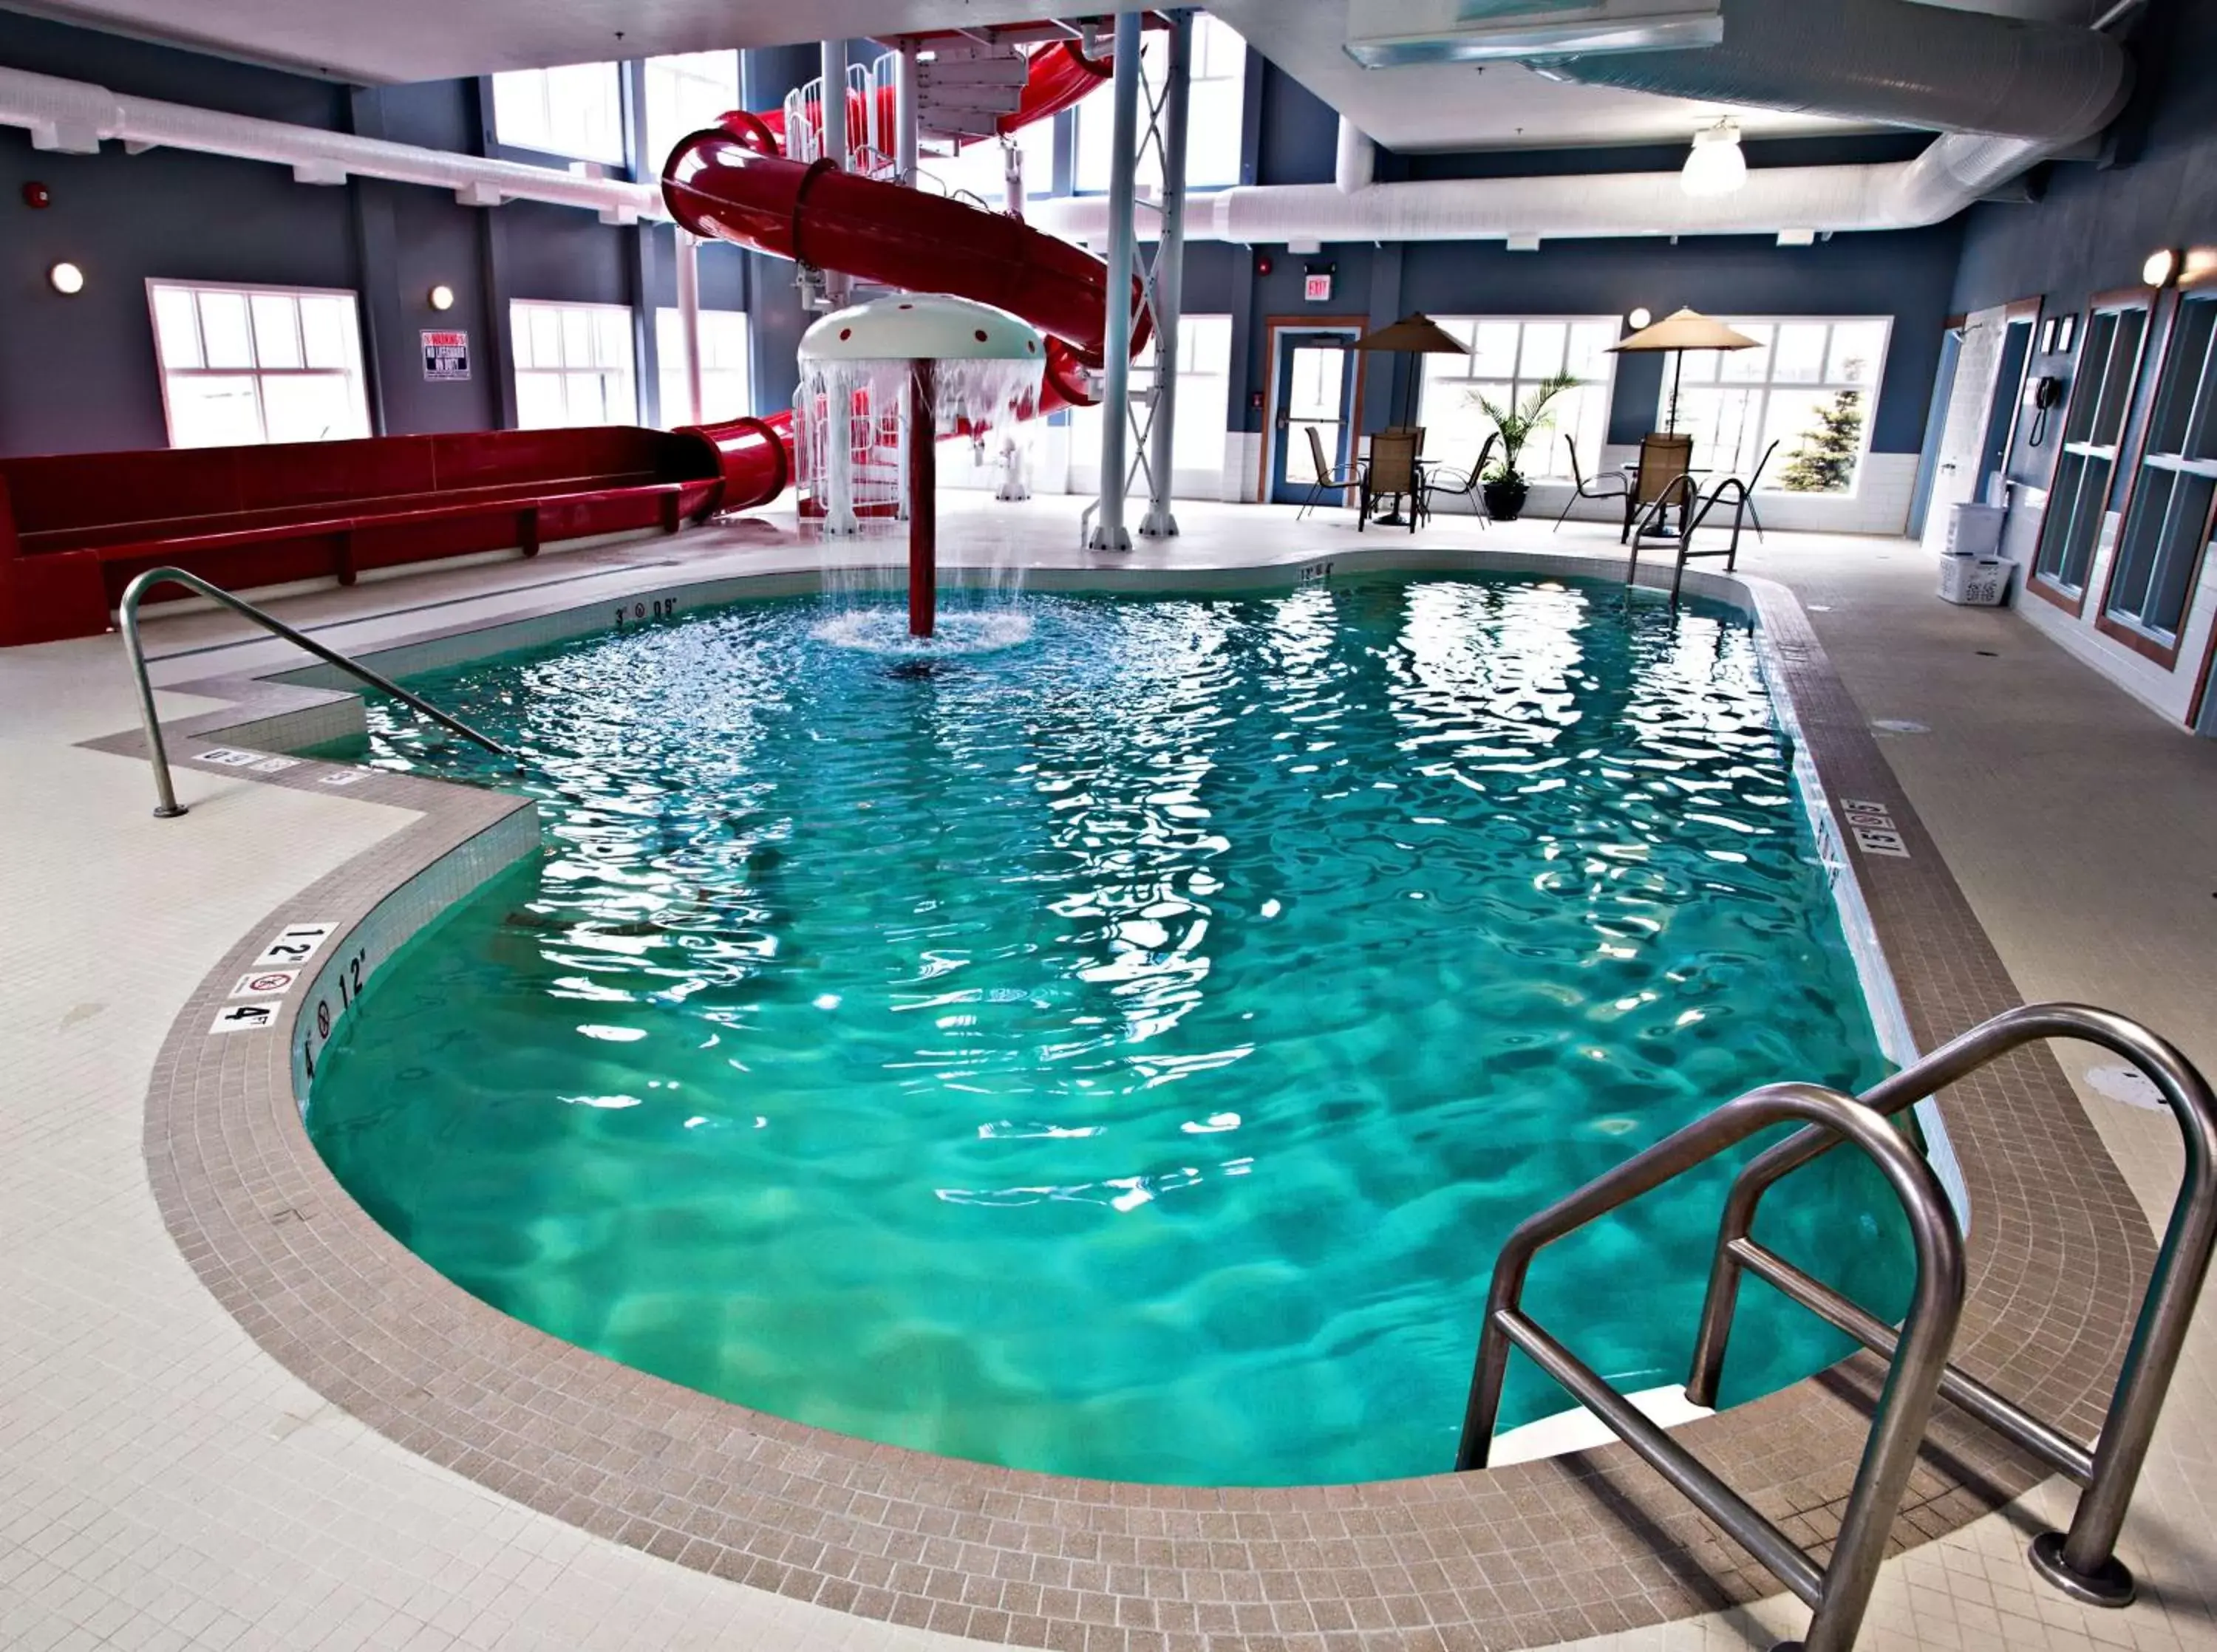 On site, Swimming Pool in Camrose Resort Casino